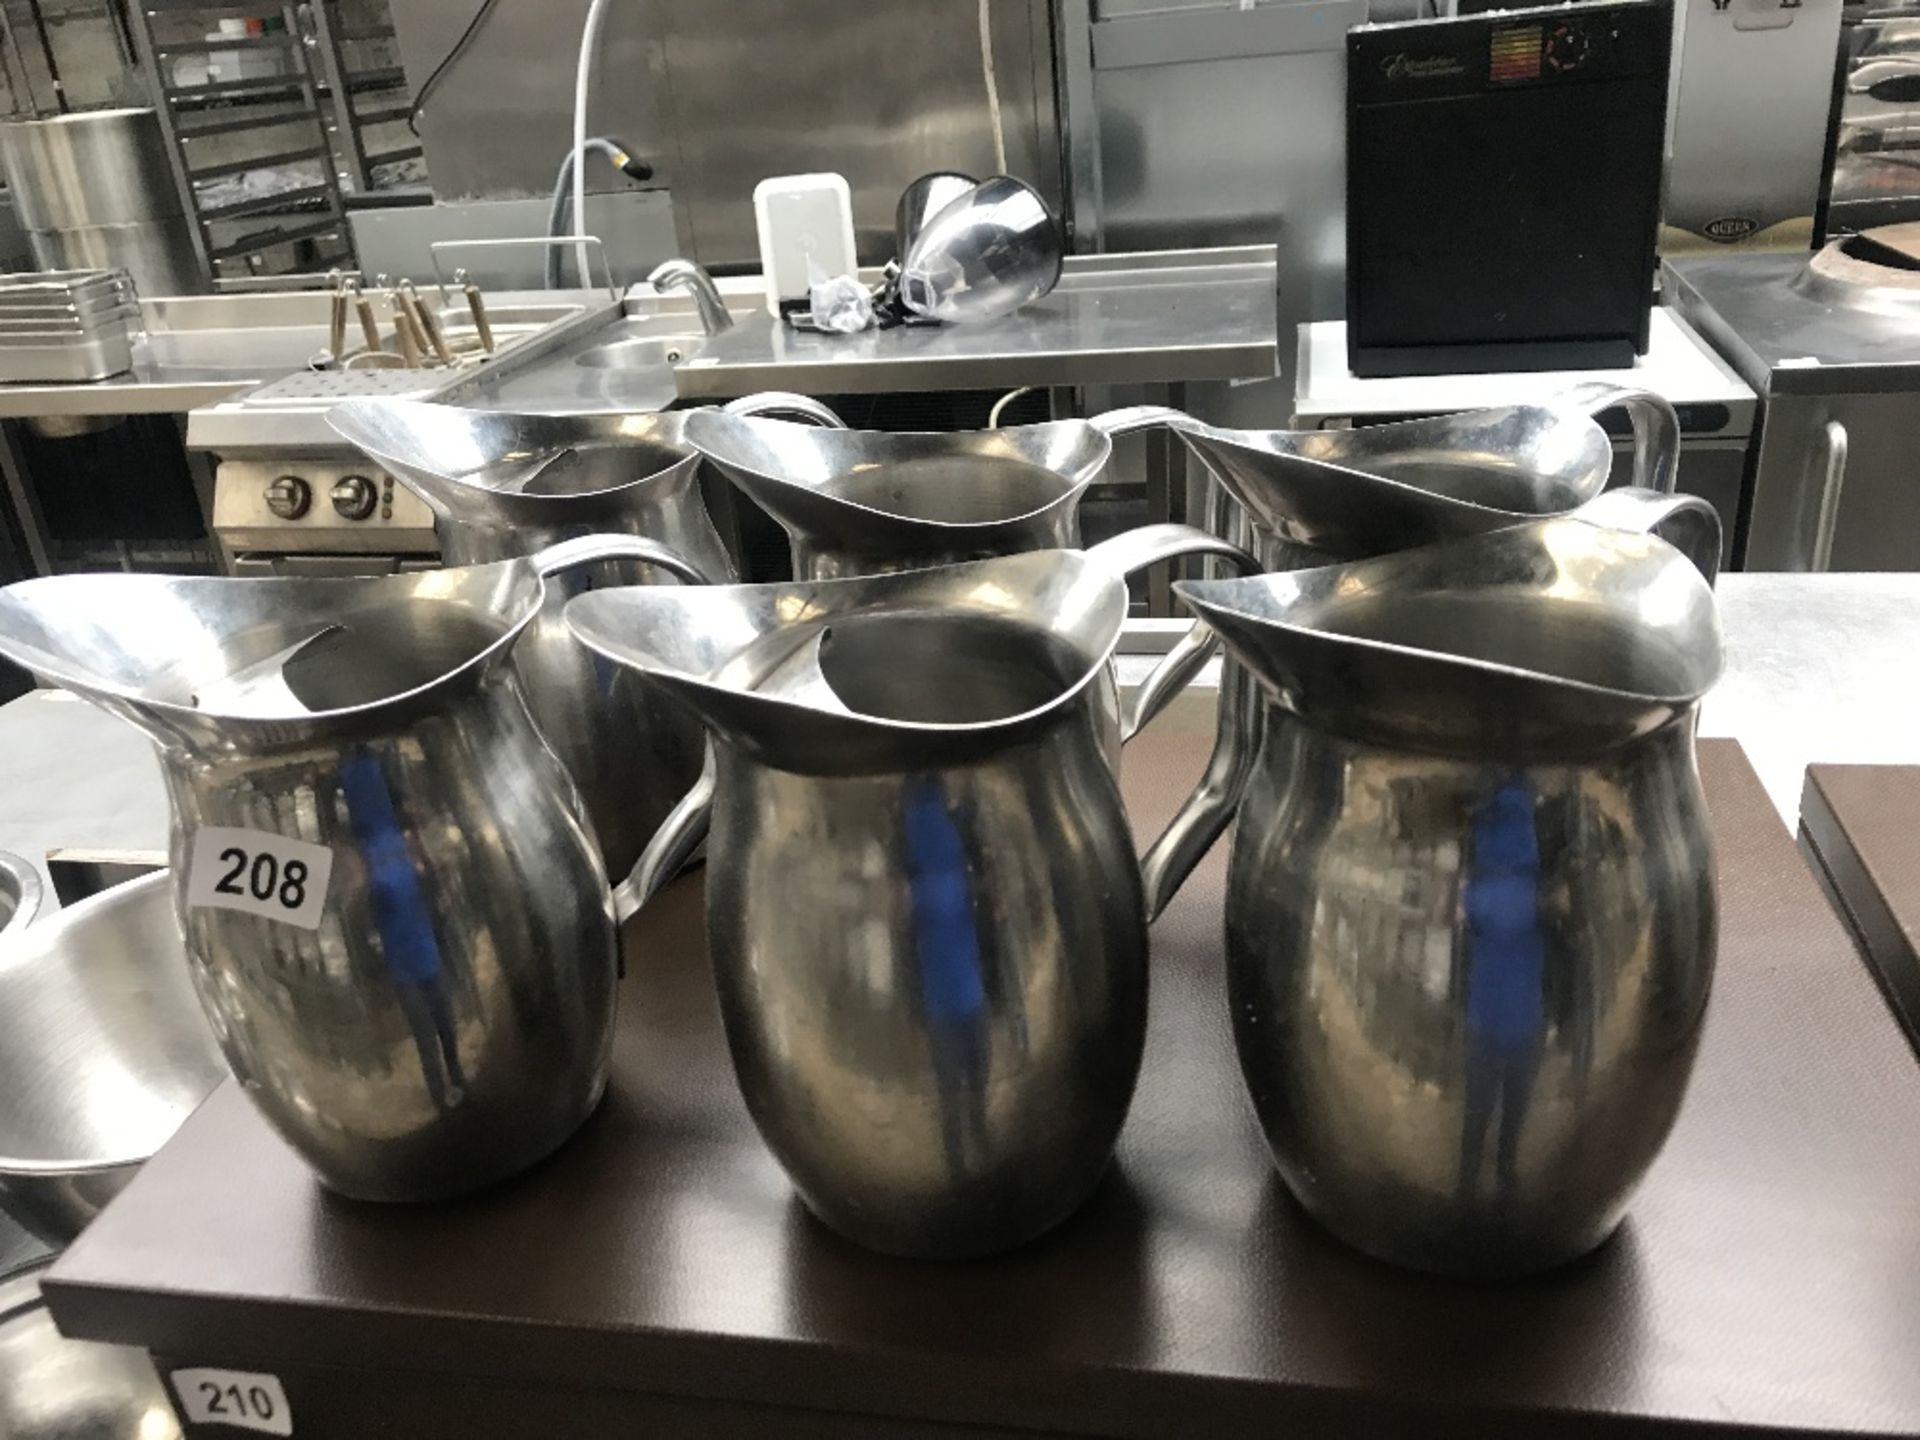 6 x stainless steel jugs